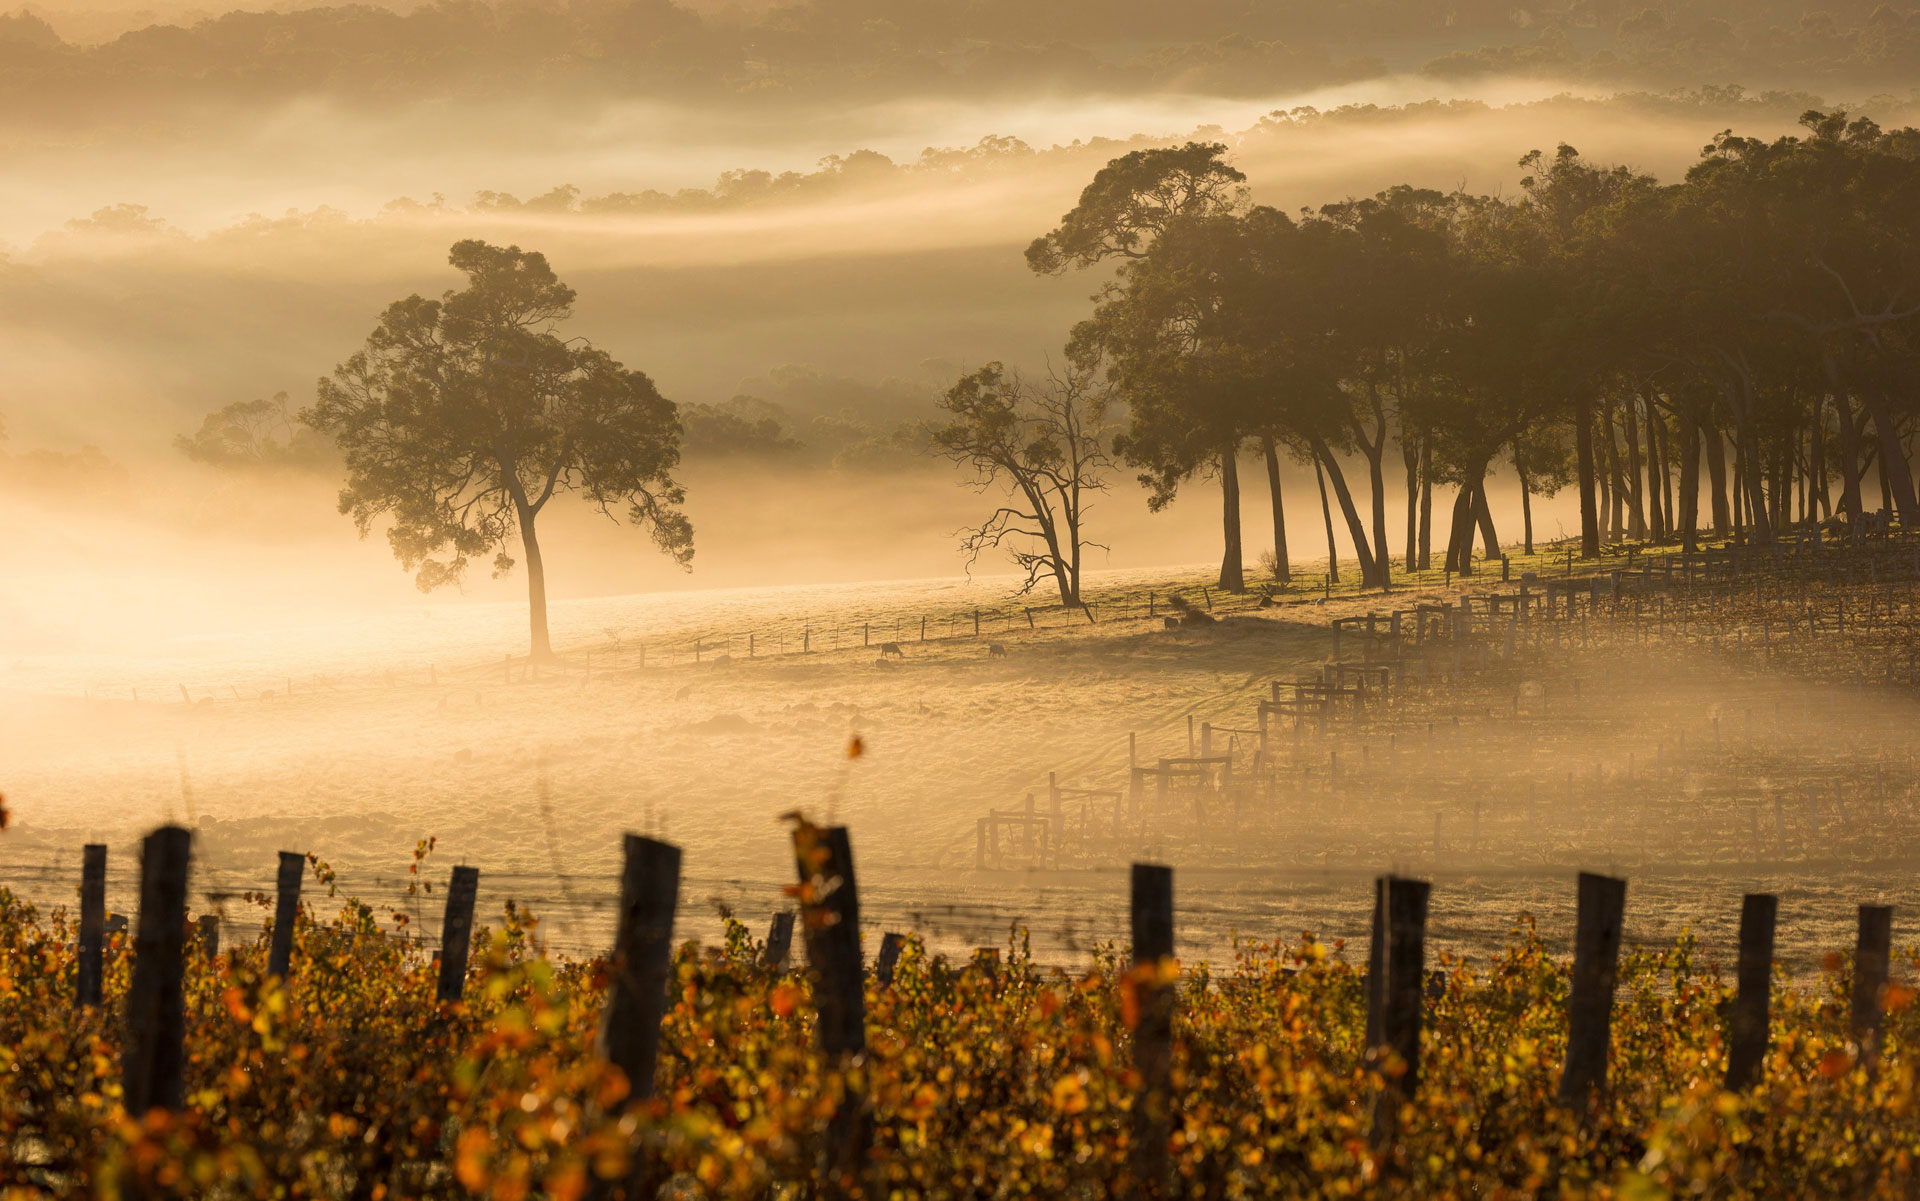 mist over the vineyard